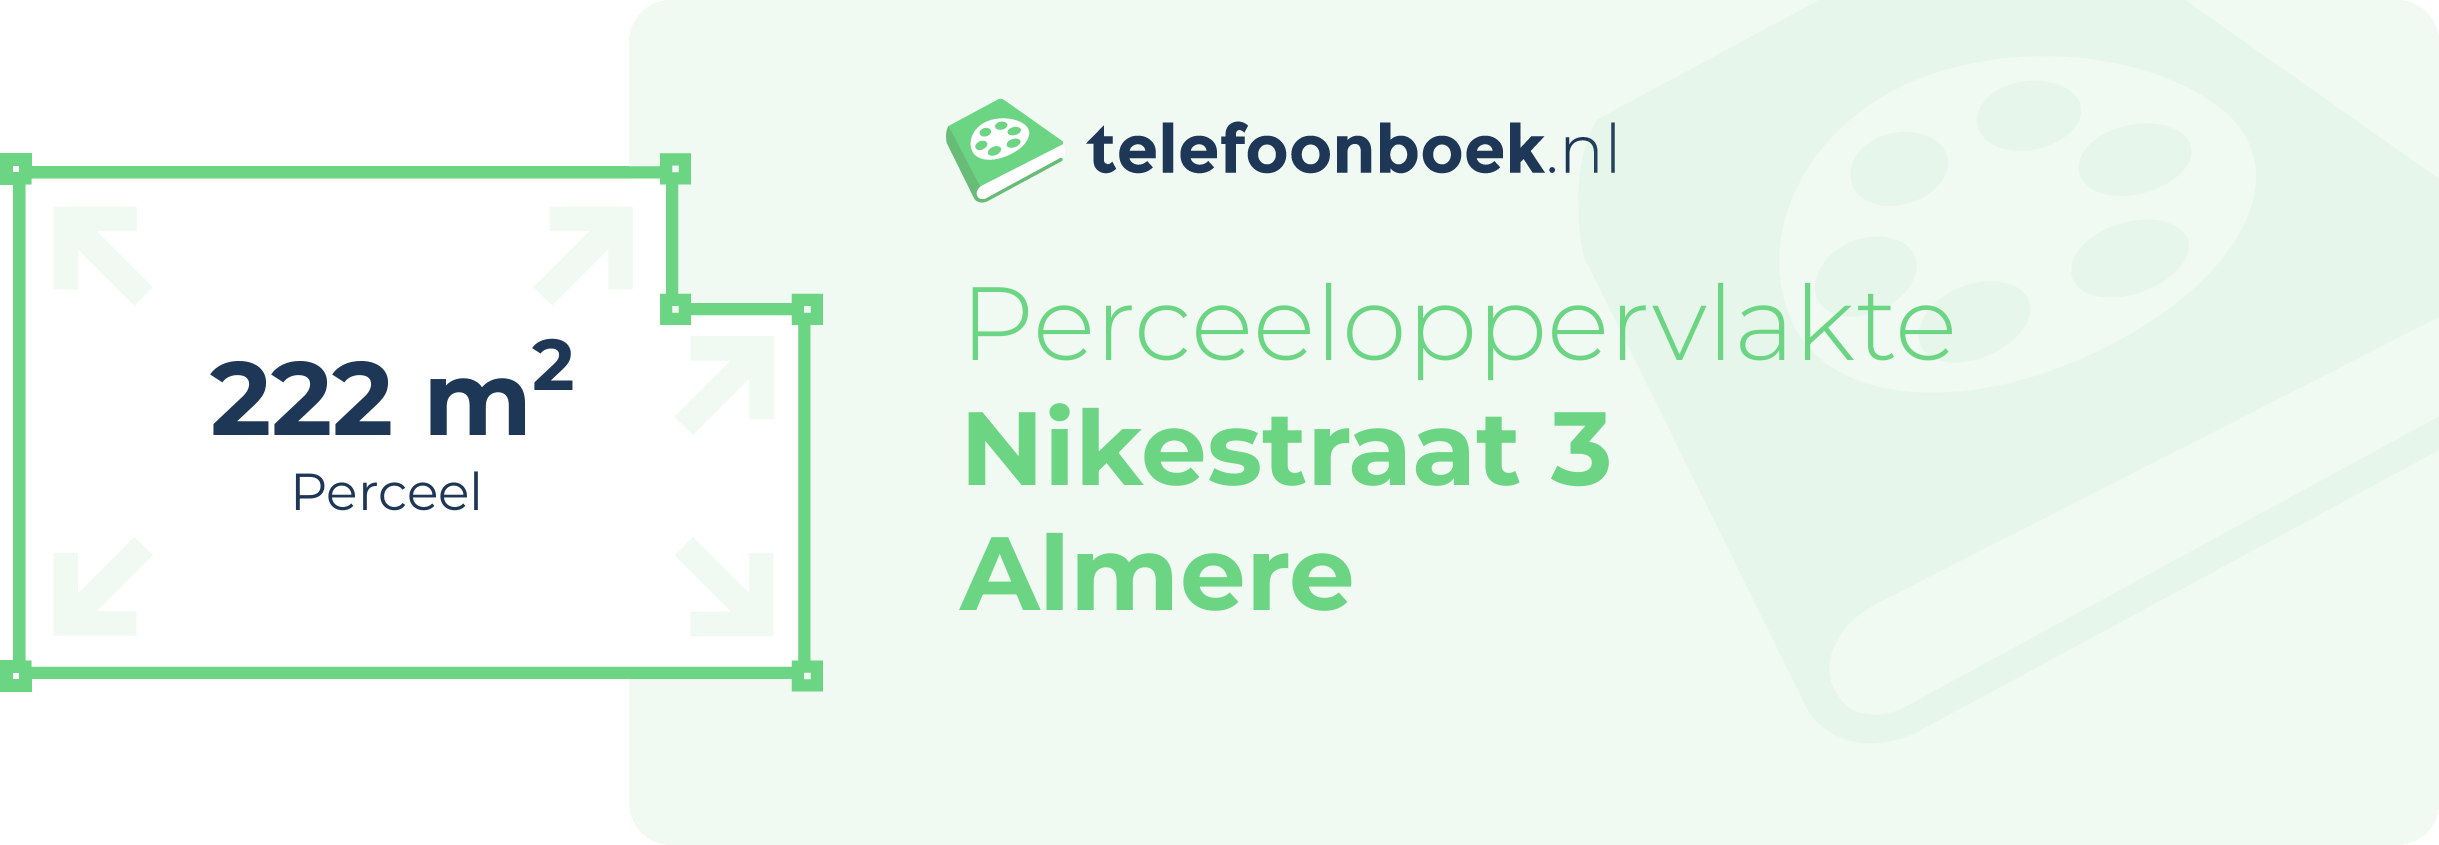 Perceeloppervlakte Nikestraat 3 Almere